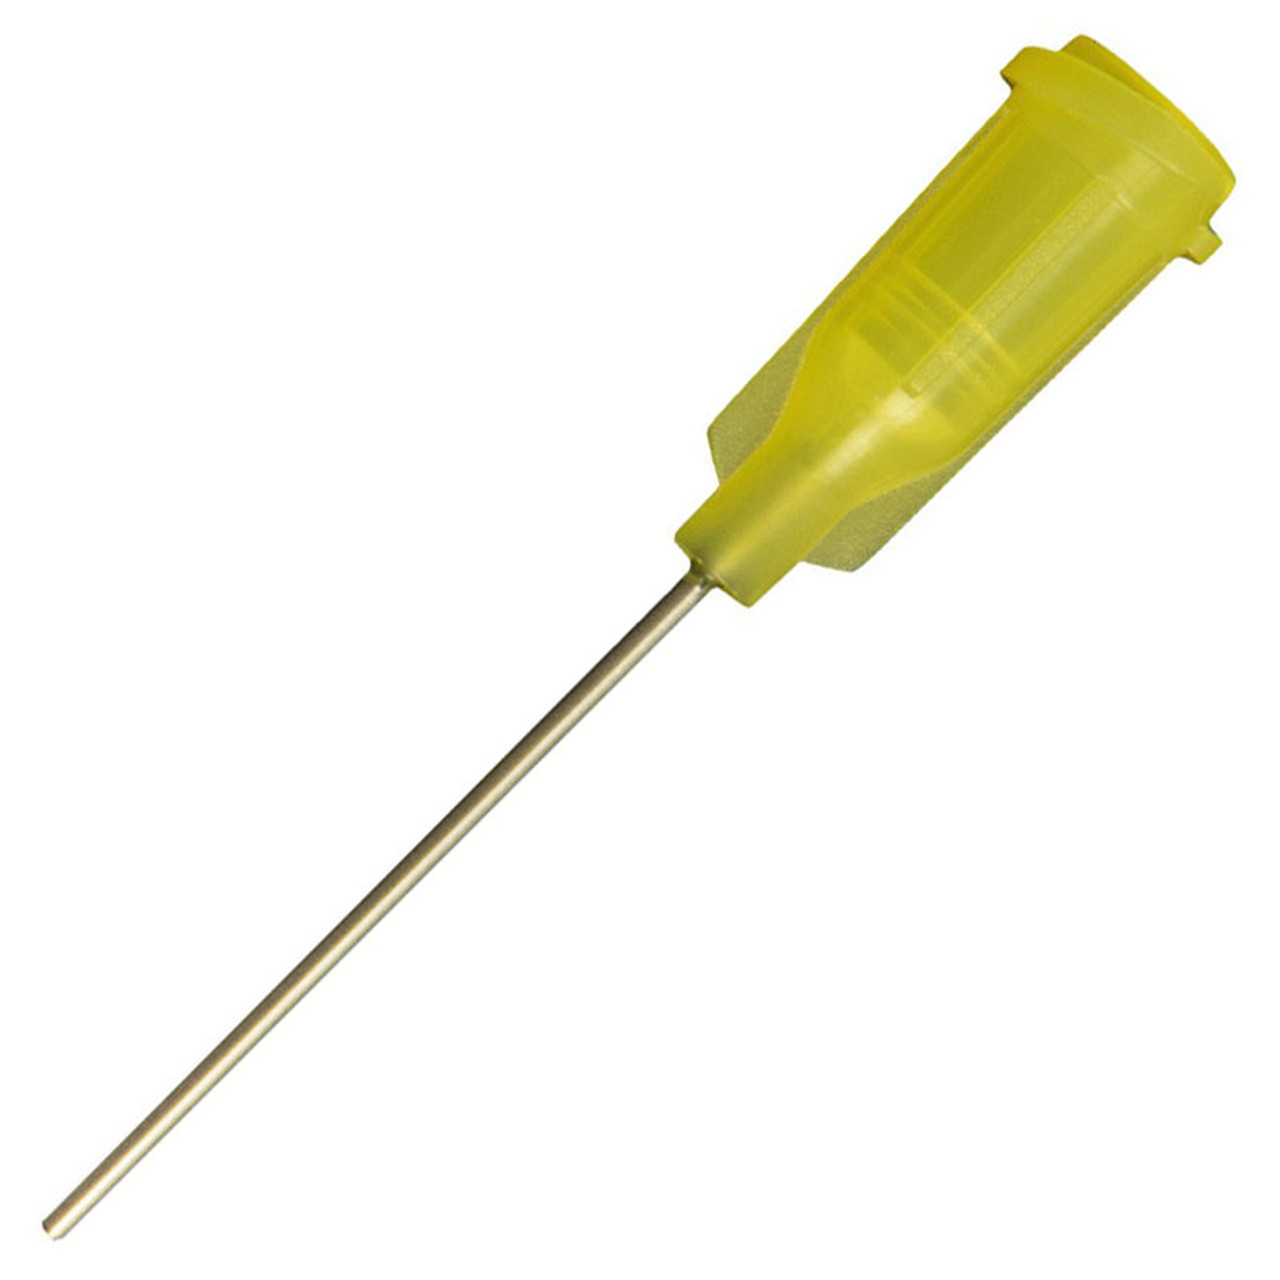 Blunt Tip Dispensing Fill Needles 20ga x 1.0 Yellow